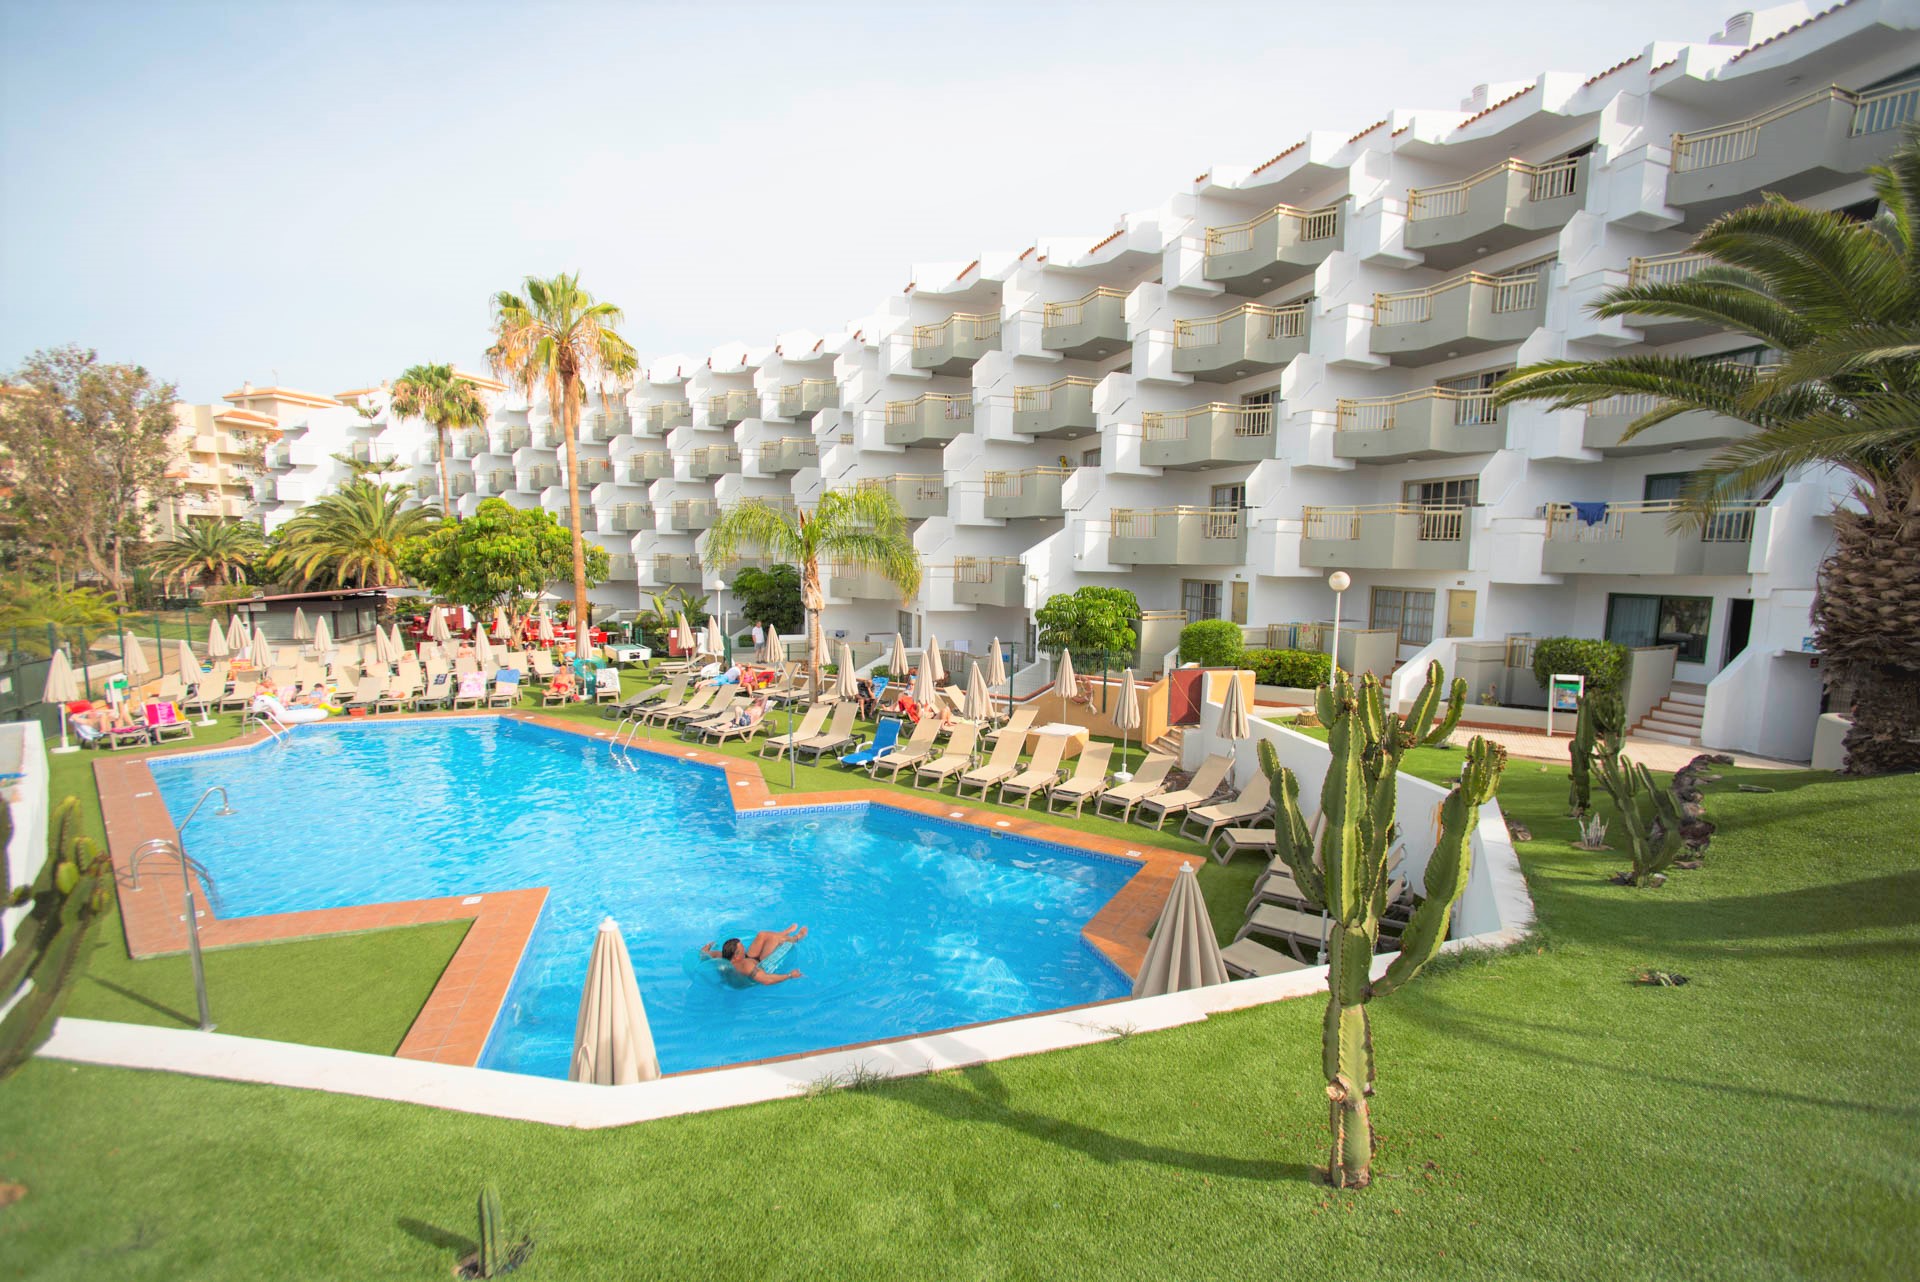 Canaries - Tenerife - Espagne - Hôtel Playaolid Suites & Apartments 3*